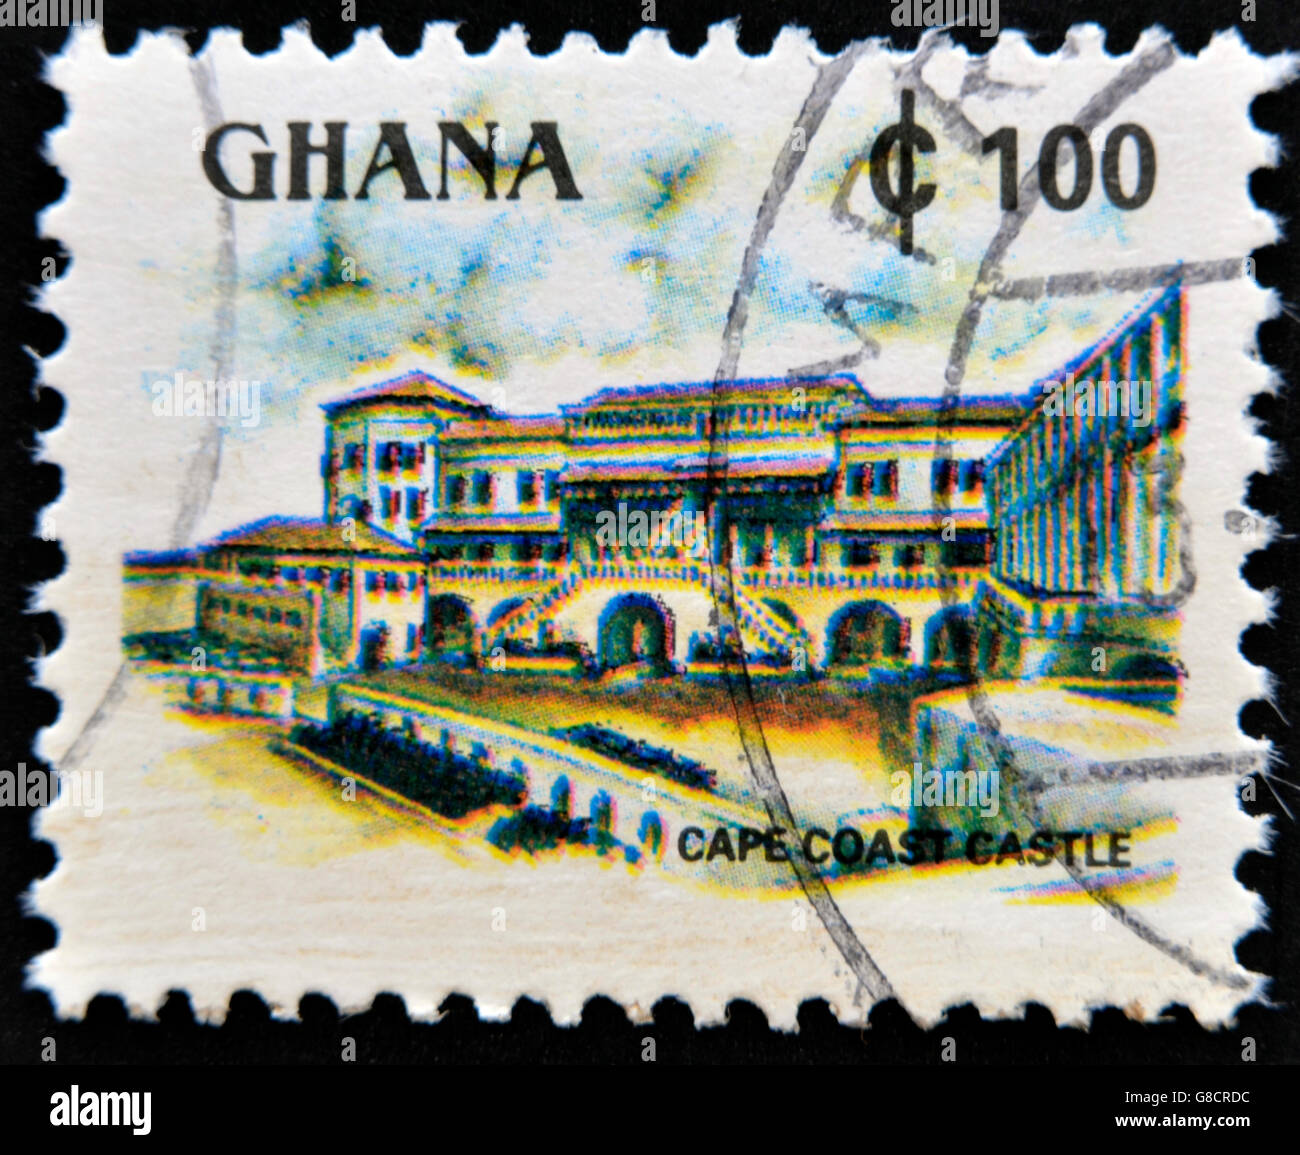 GHANA - CIRCA 2005: A stamp printed in Ghana shows Cape Coast Castle, circa 2005 Stock Photo